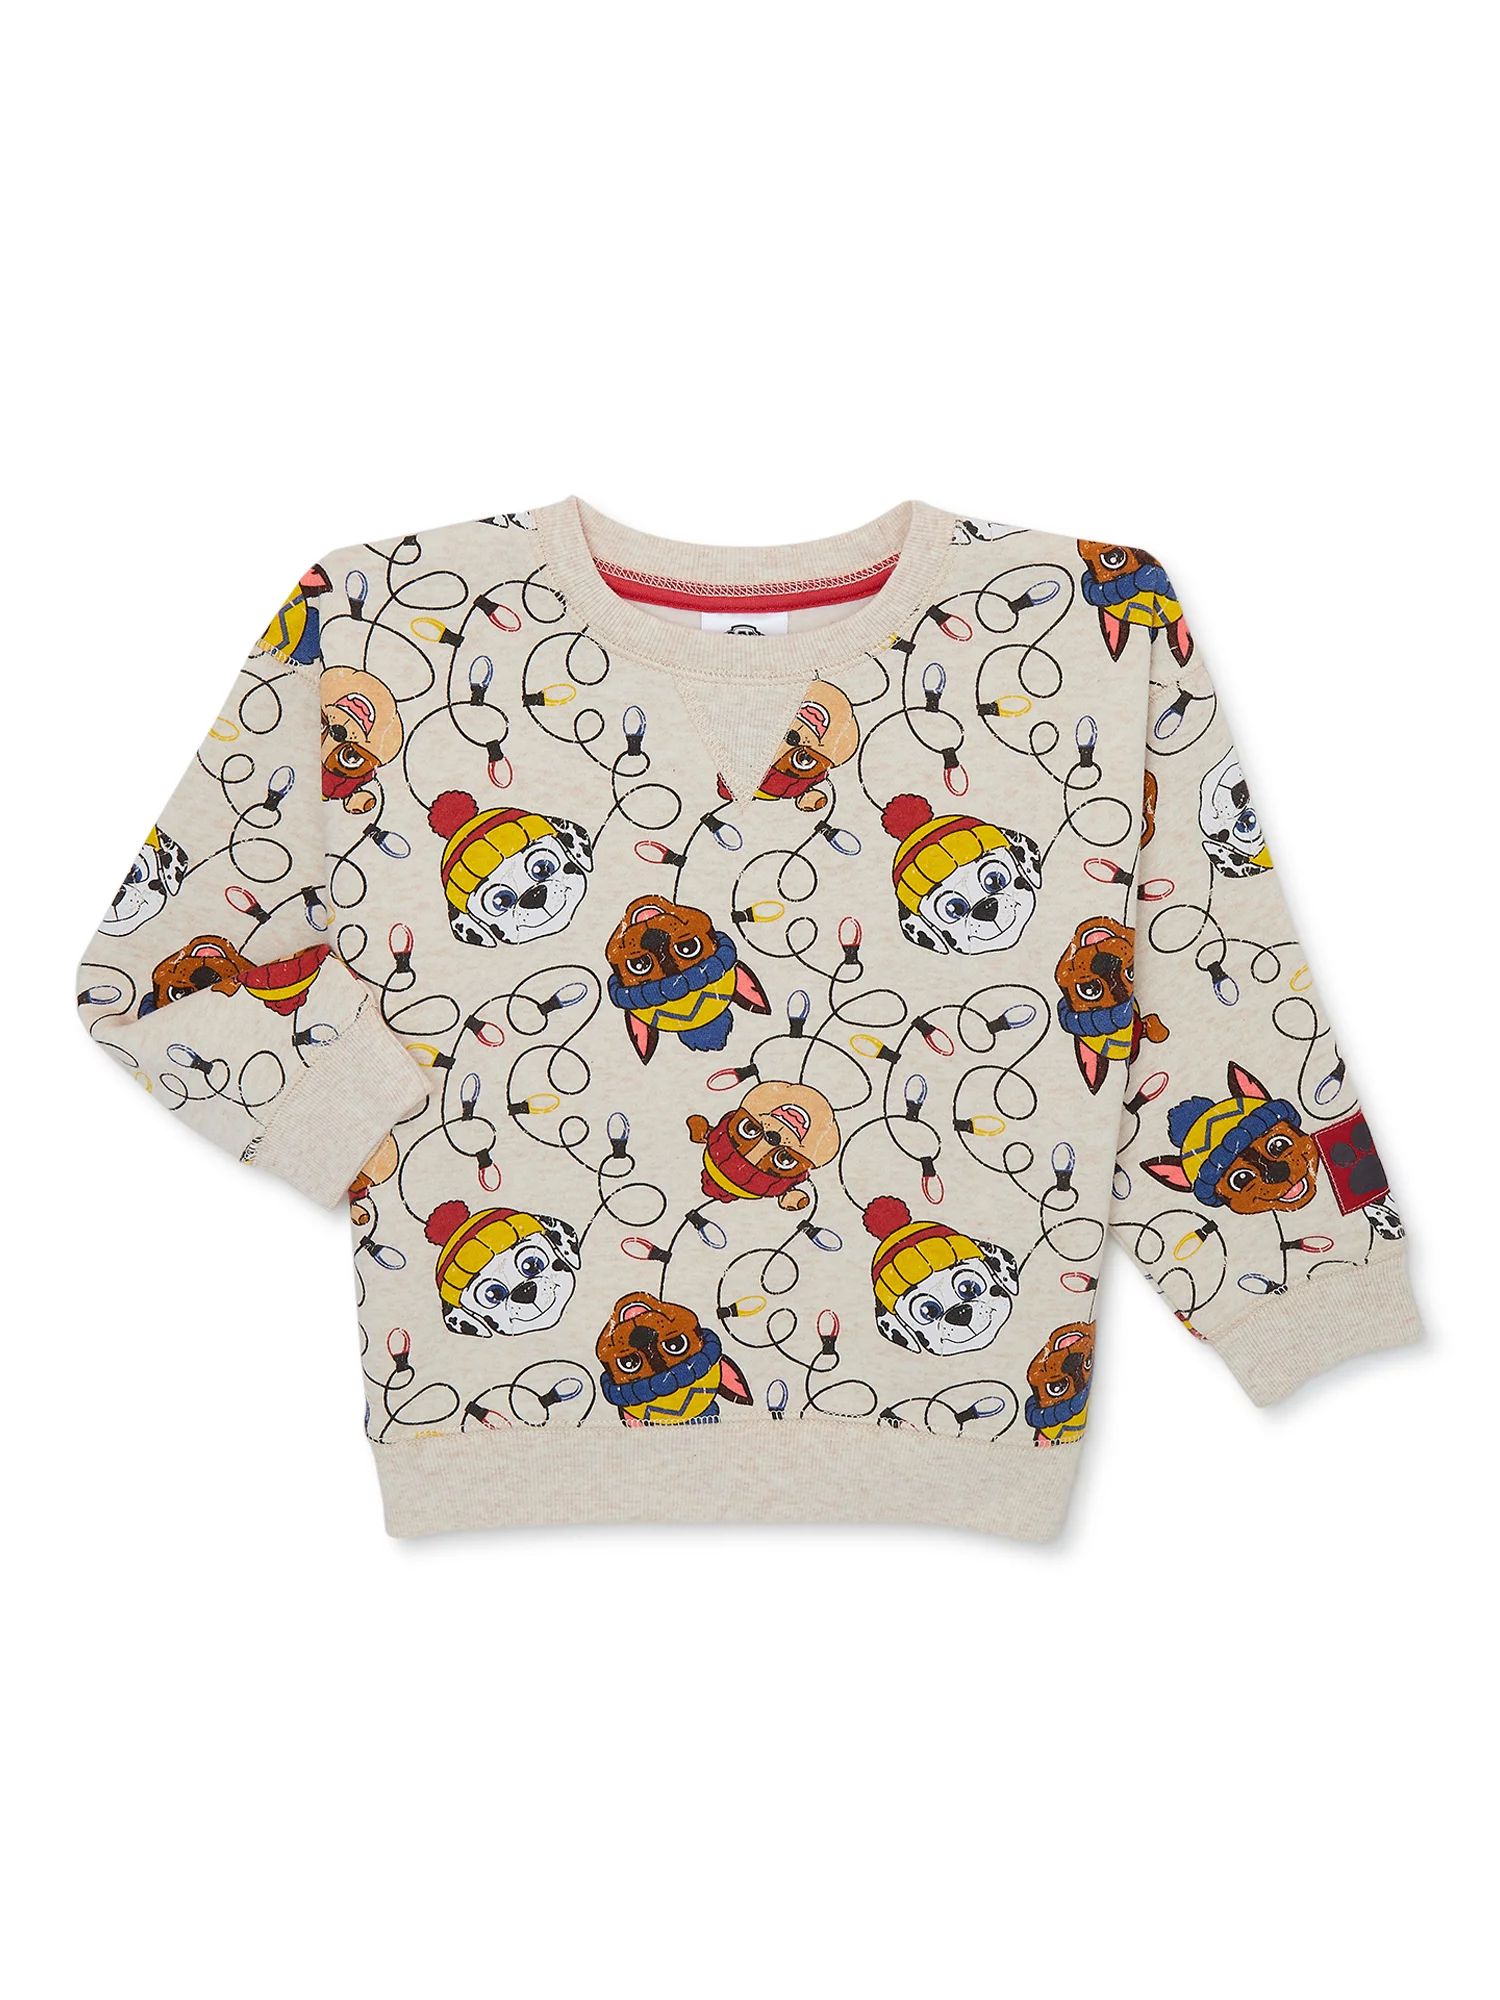 PAW Patrol Toddler Boy's Christmas Sweatshirt, Sizes 12 Months-5T | Walmart (US)